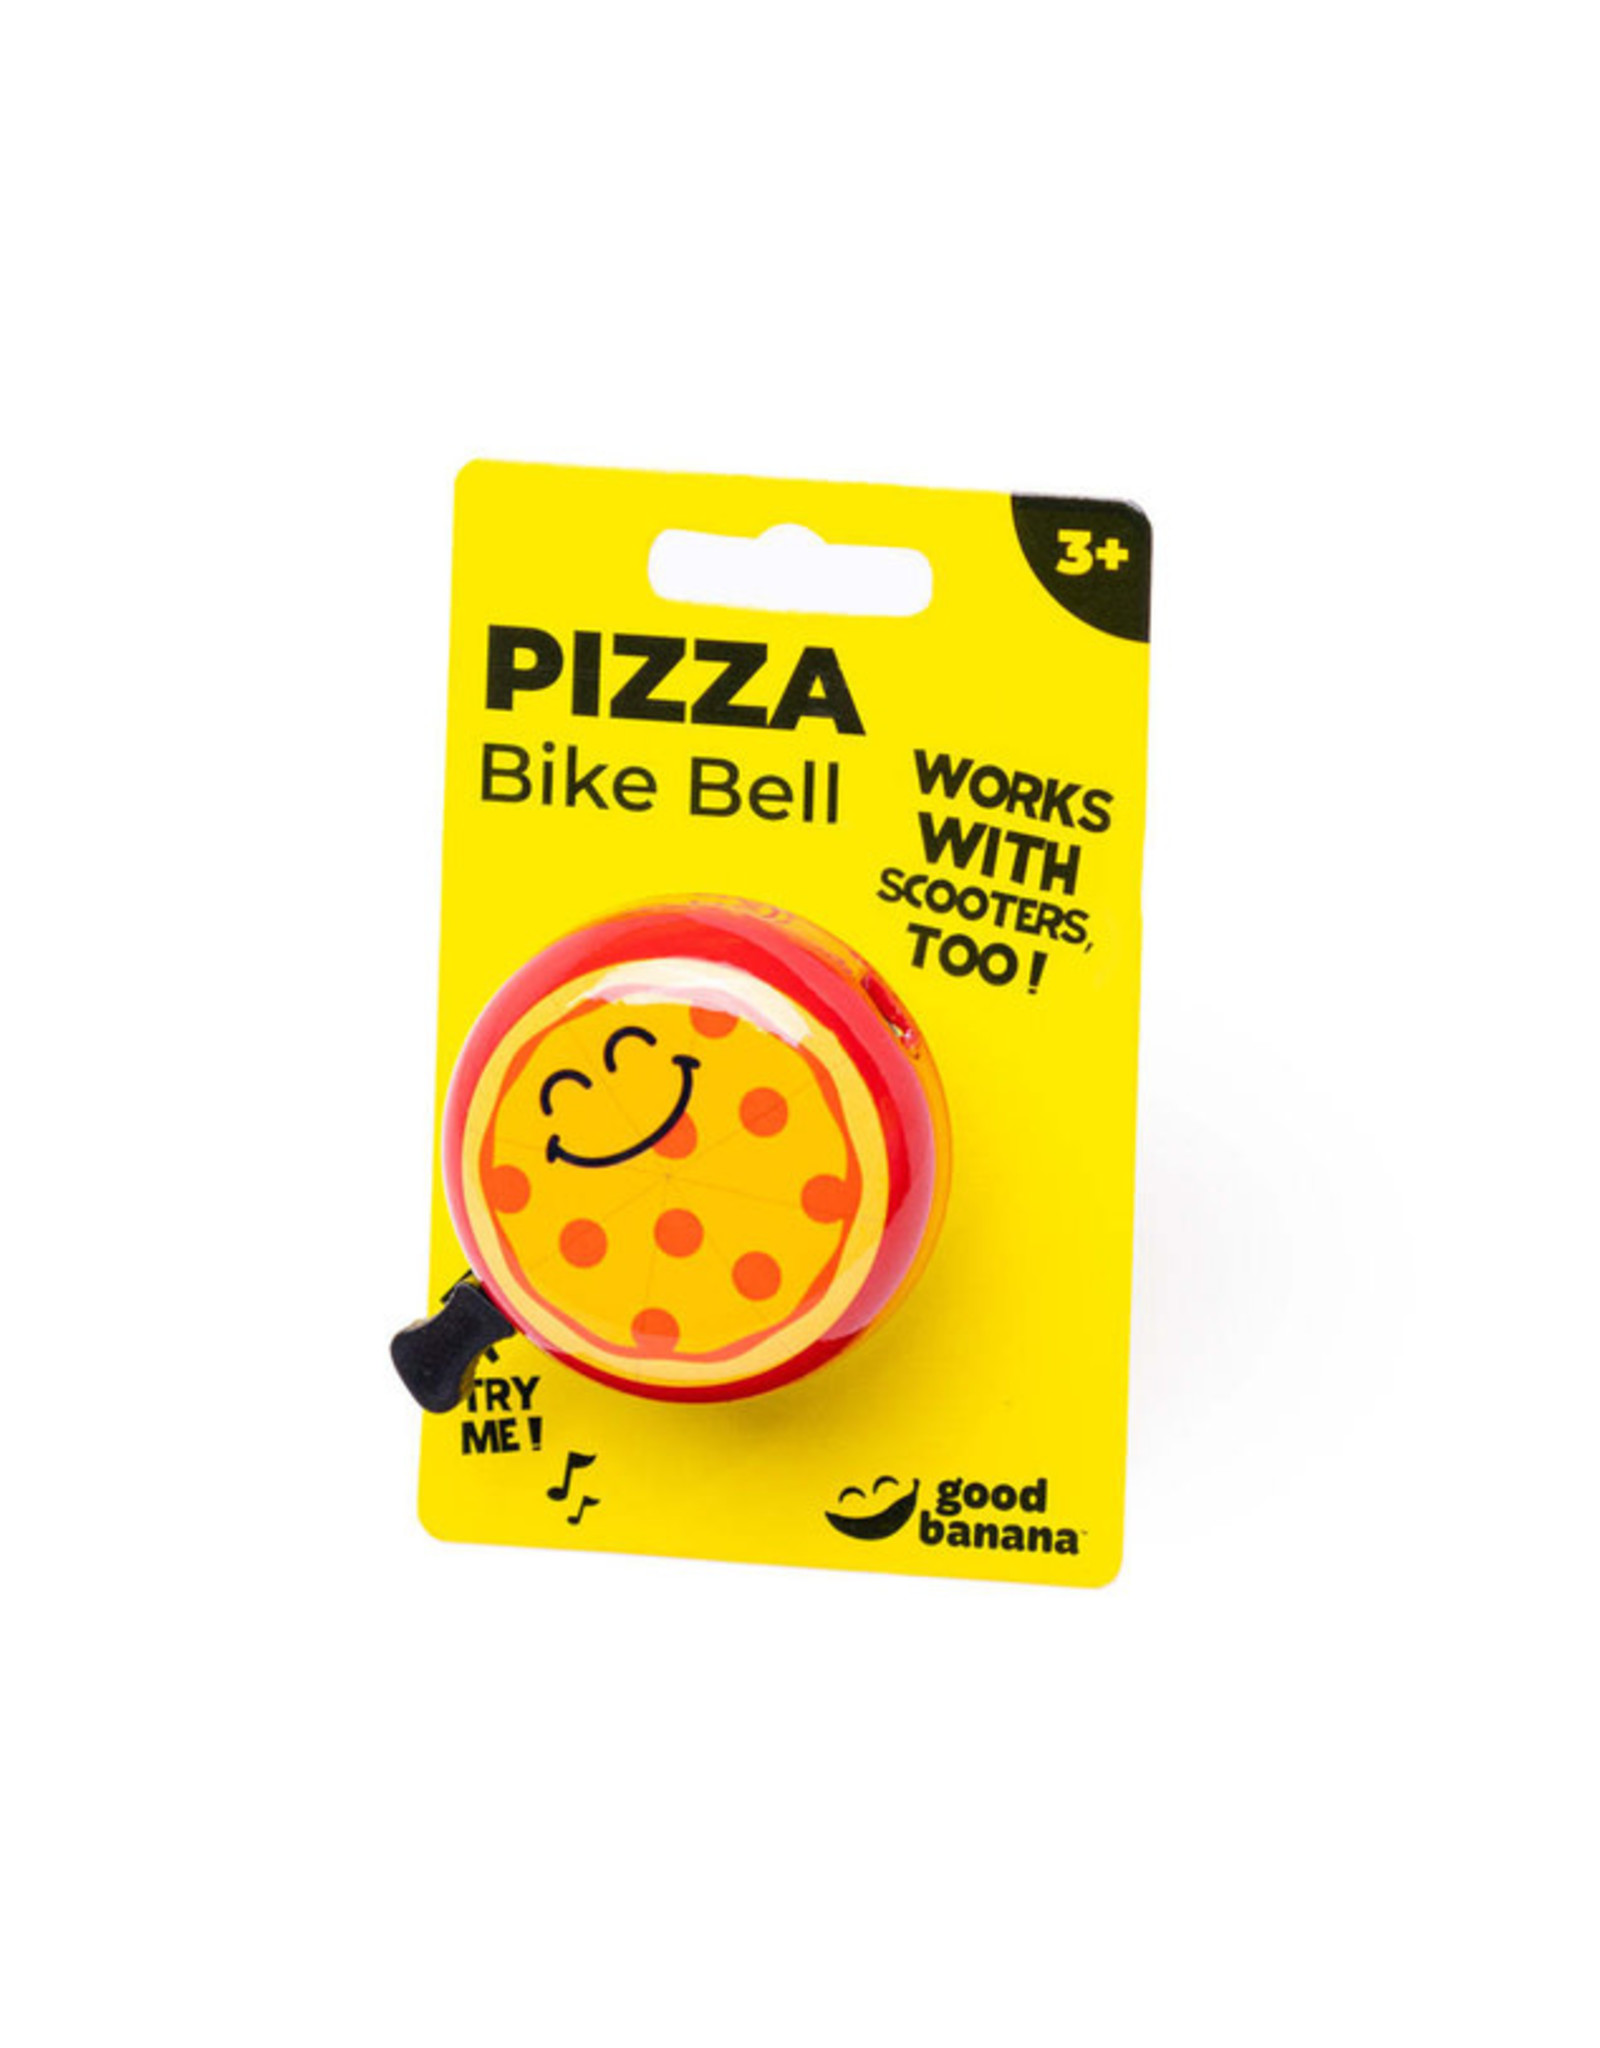 Bike Bell - Pizza